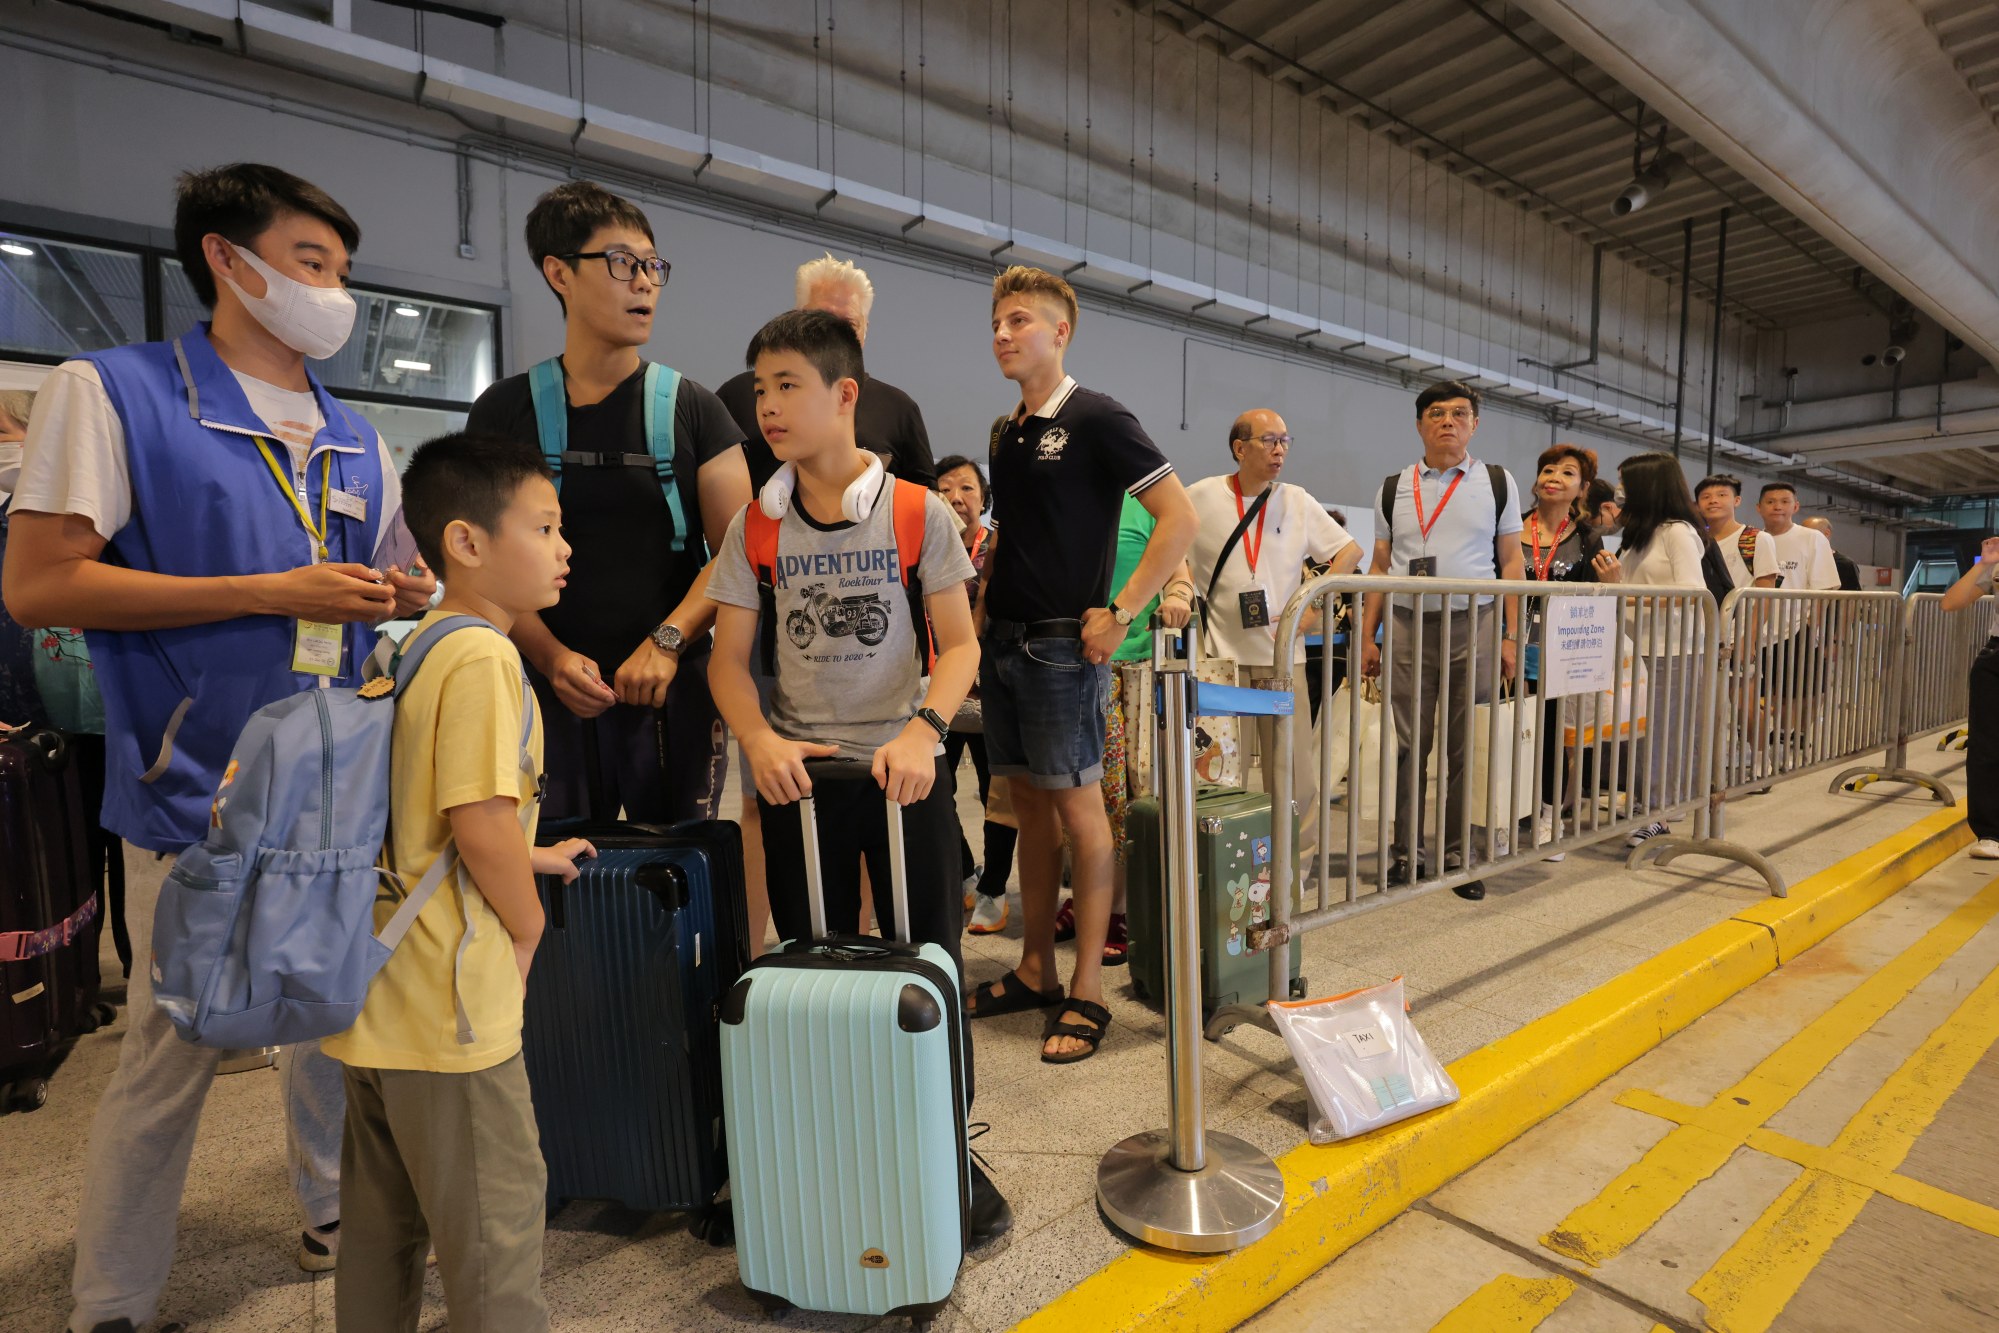 Exclusivo | Plan de turismo de Hong Kong para renovar el papel de Kai Tak dentro del sector: jefe de cultura